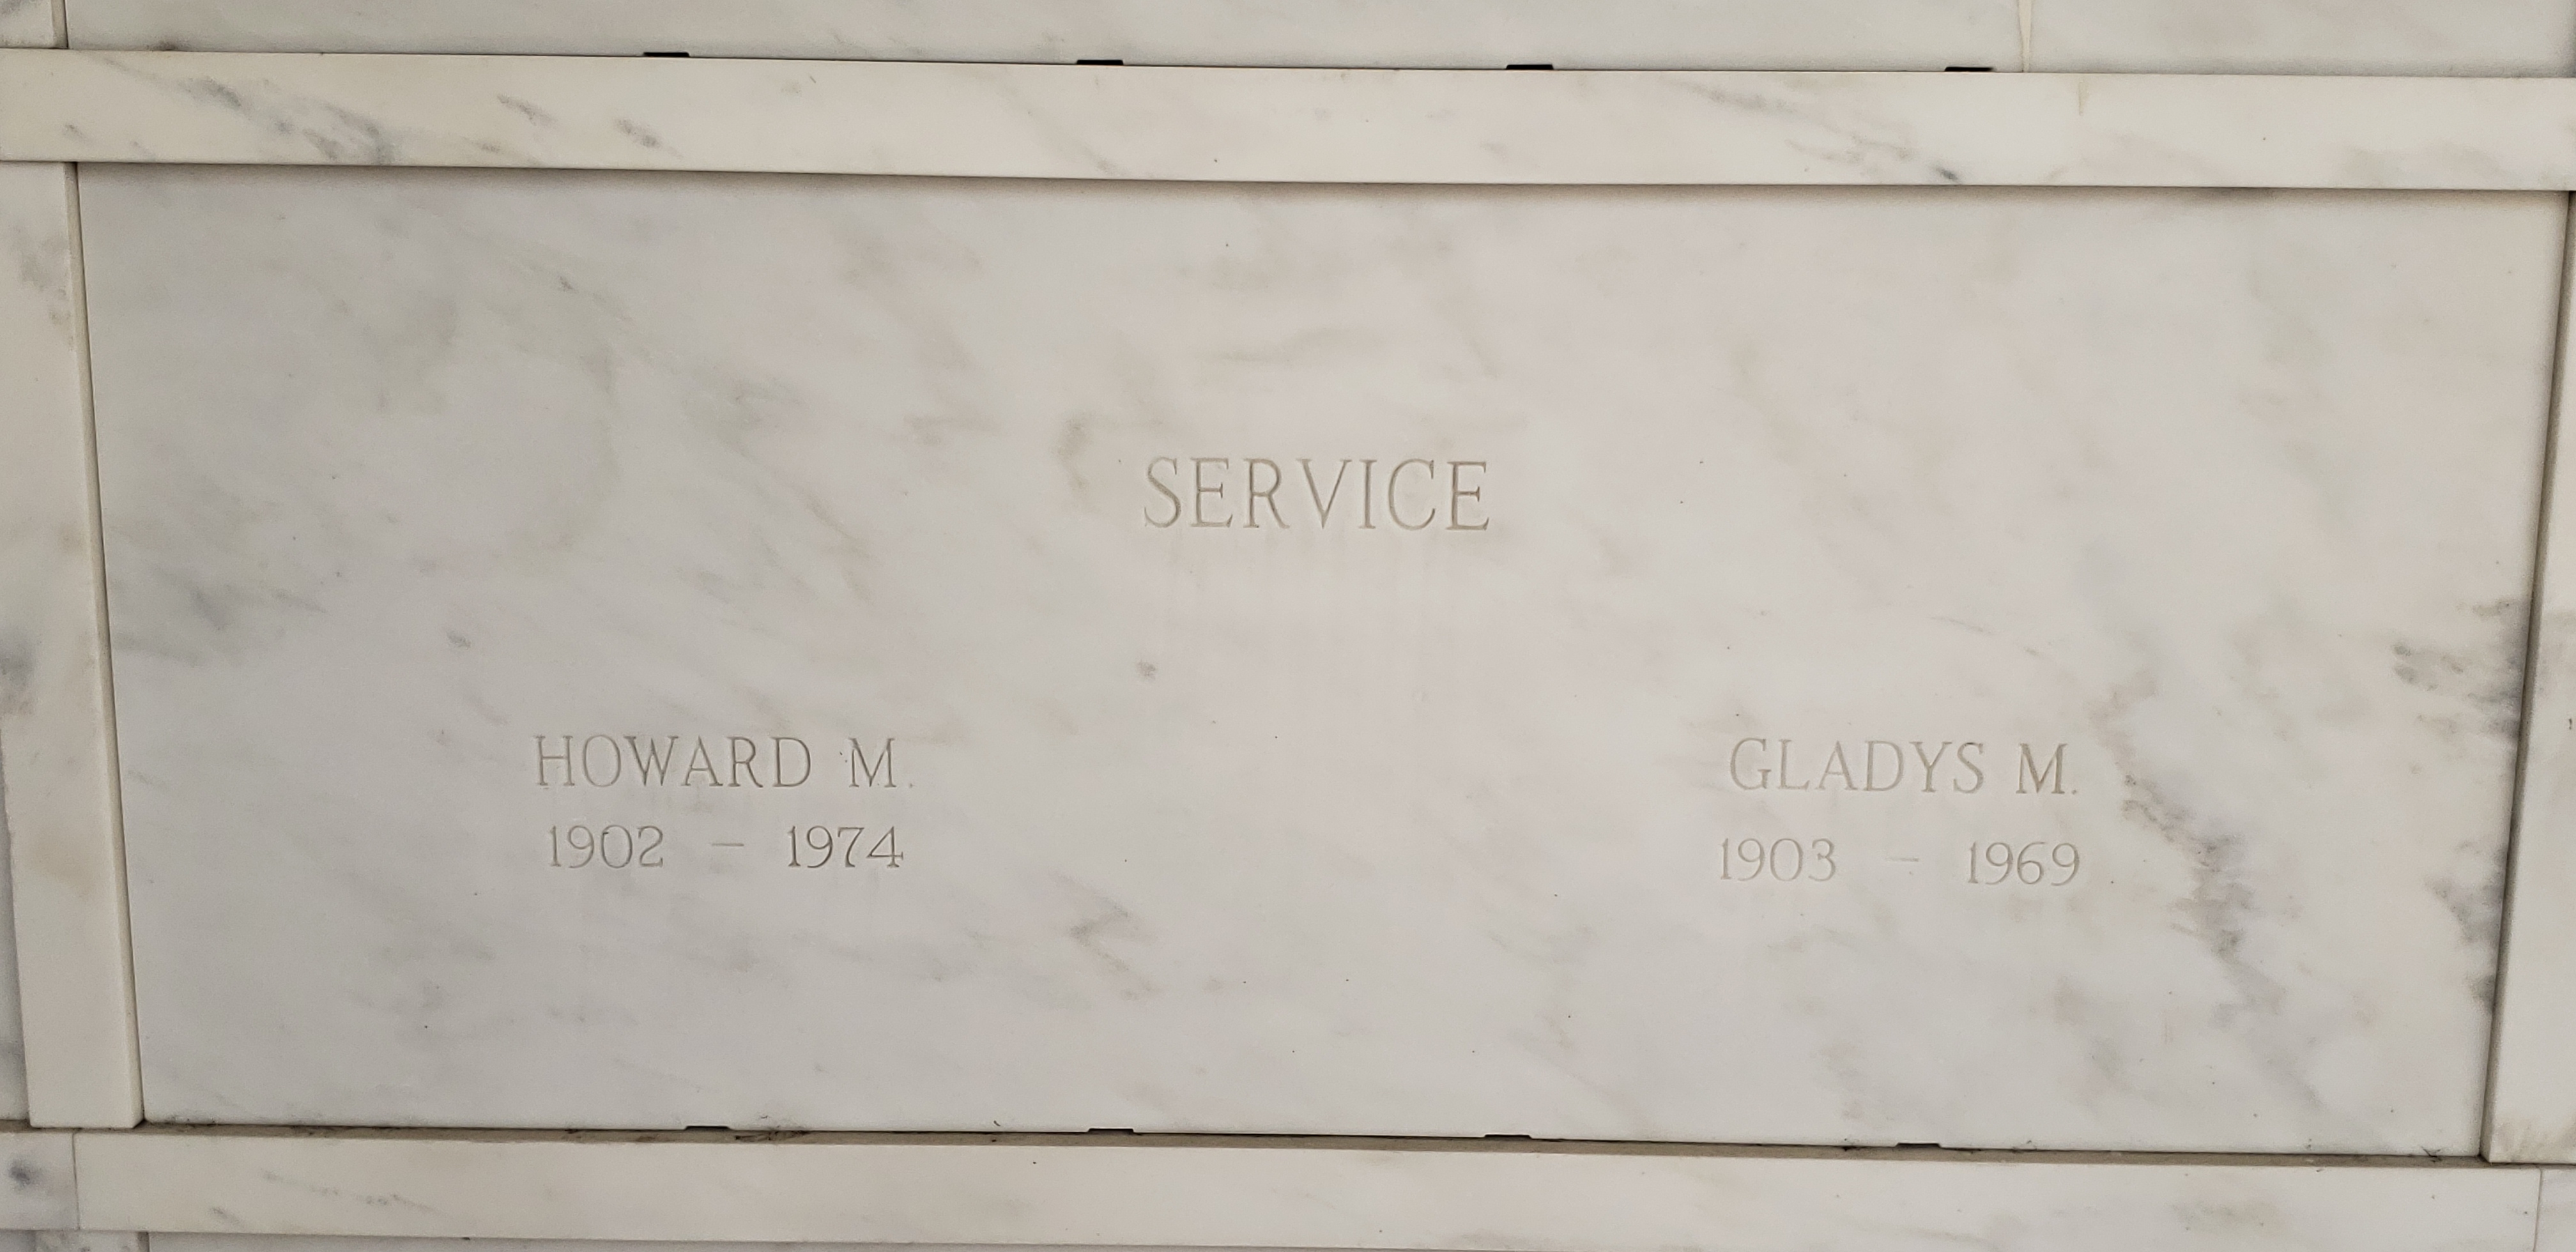 Gladys M Service